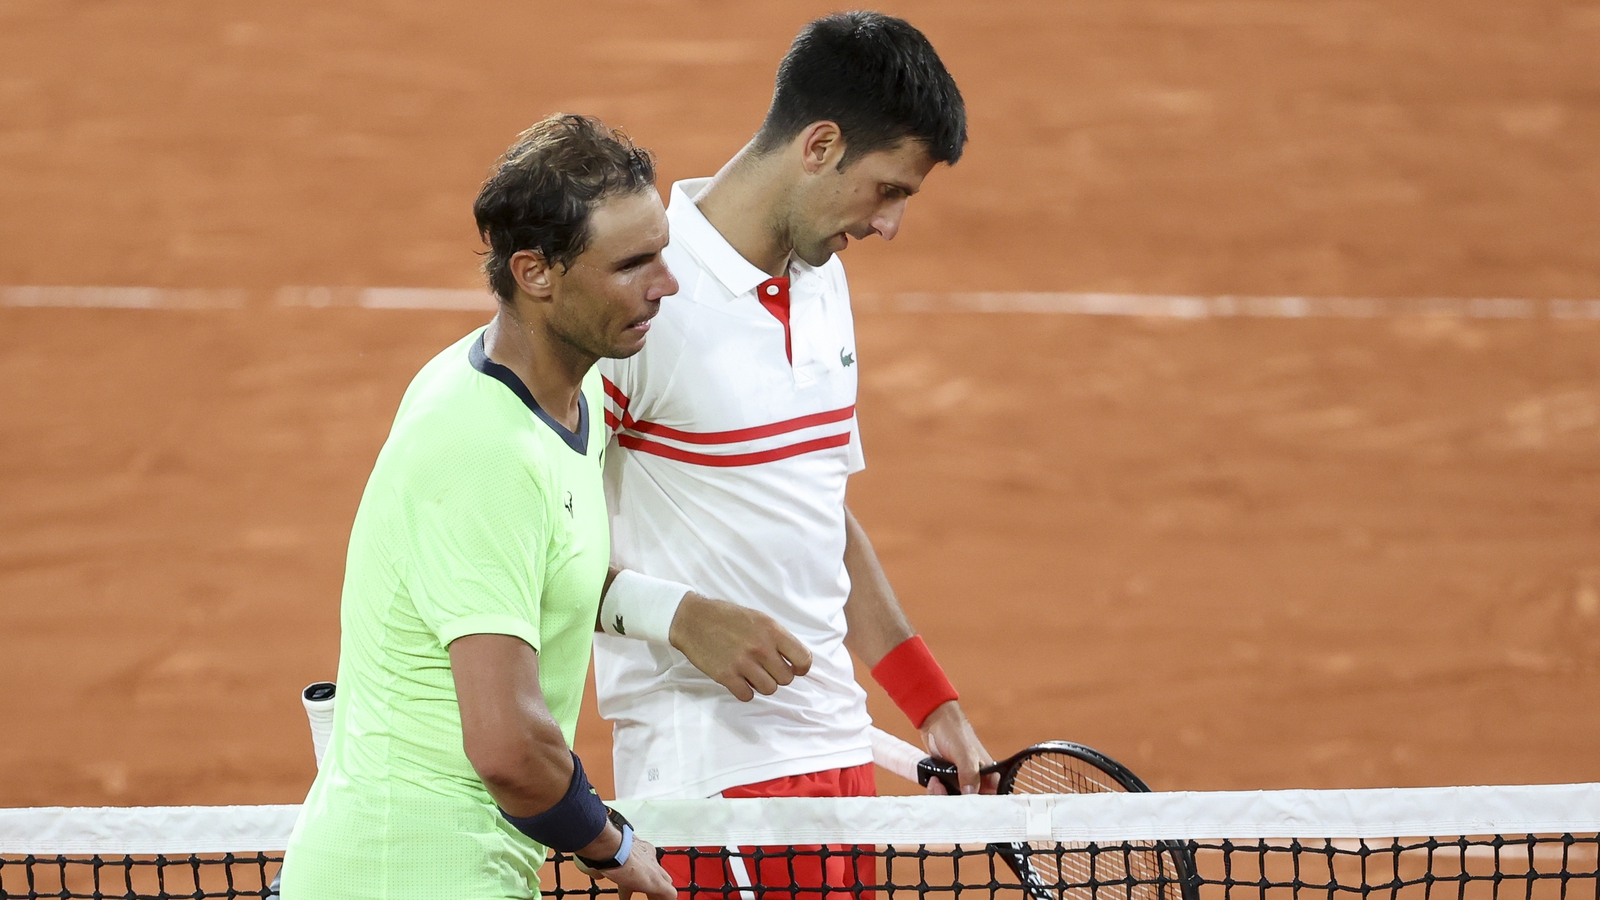 Oz Open confident on Nadal, uncertain on Djokovic - RTE.ie